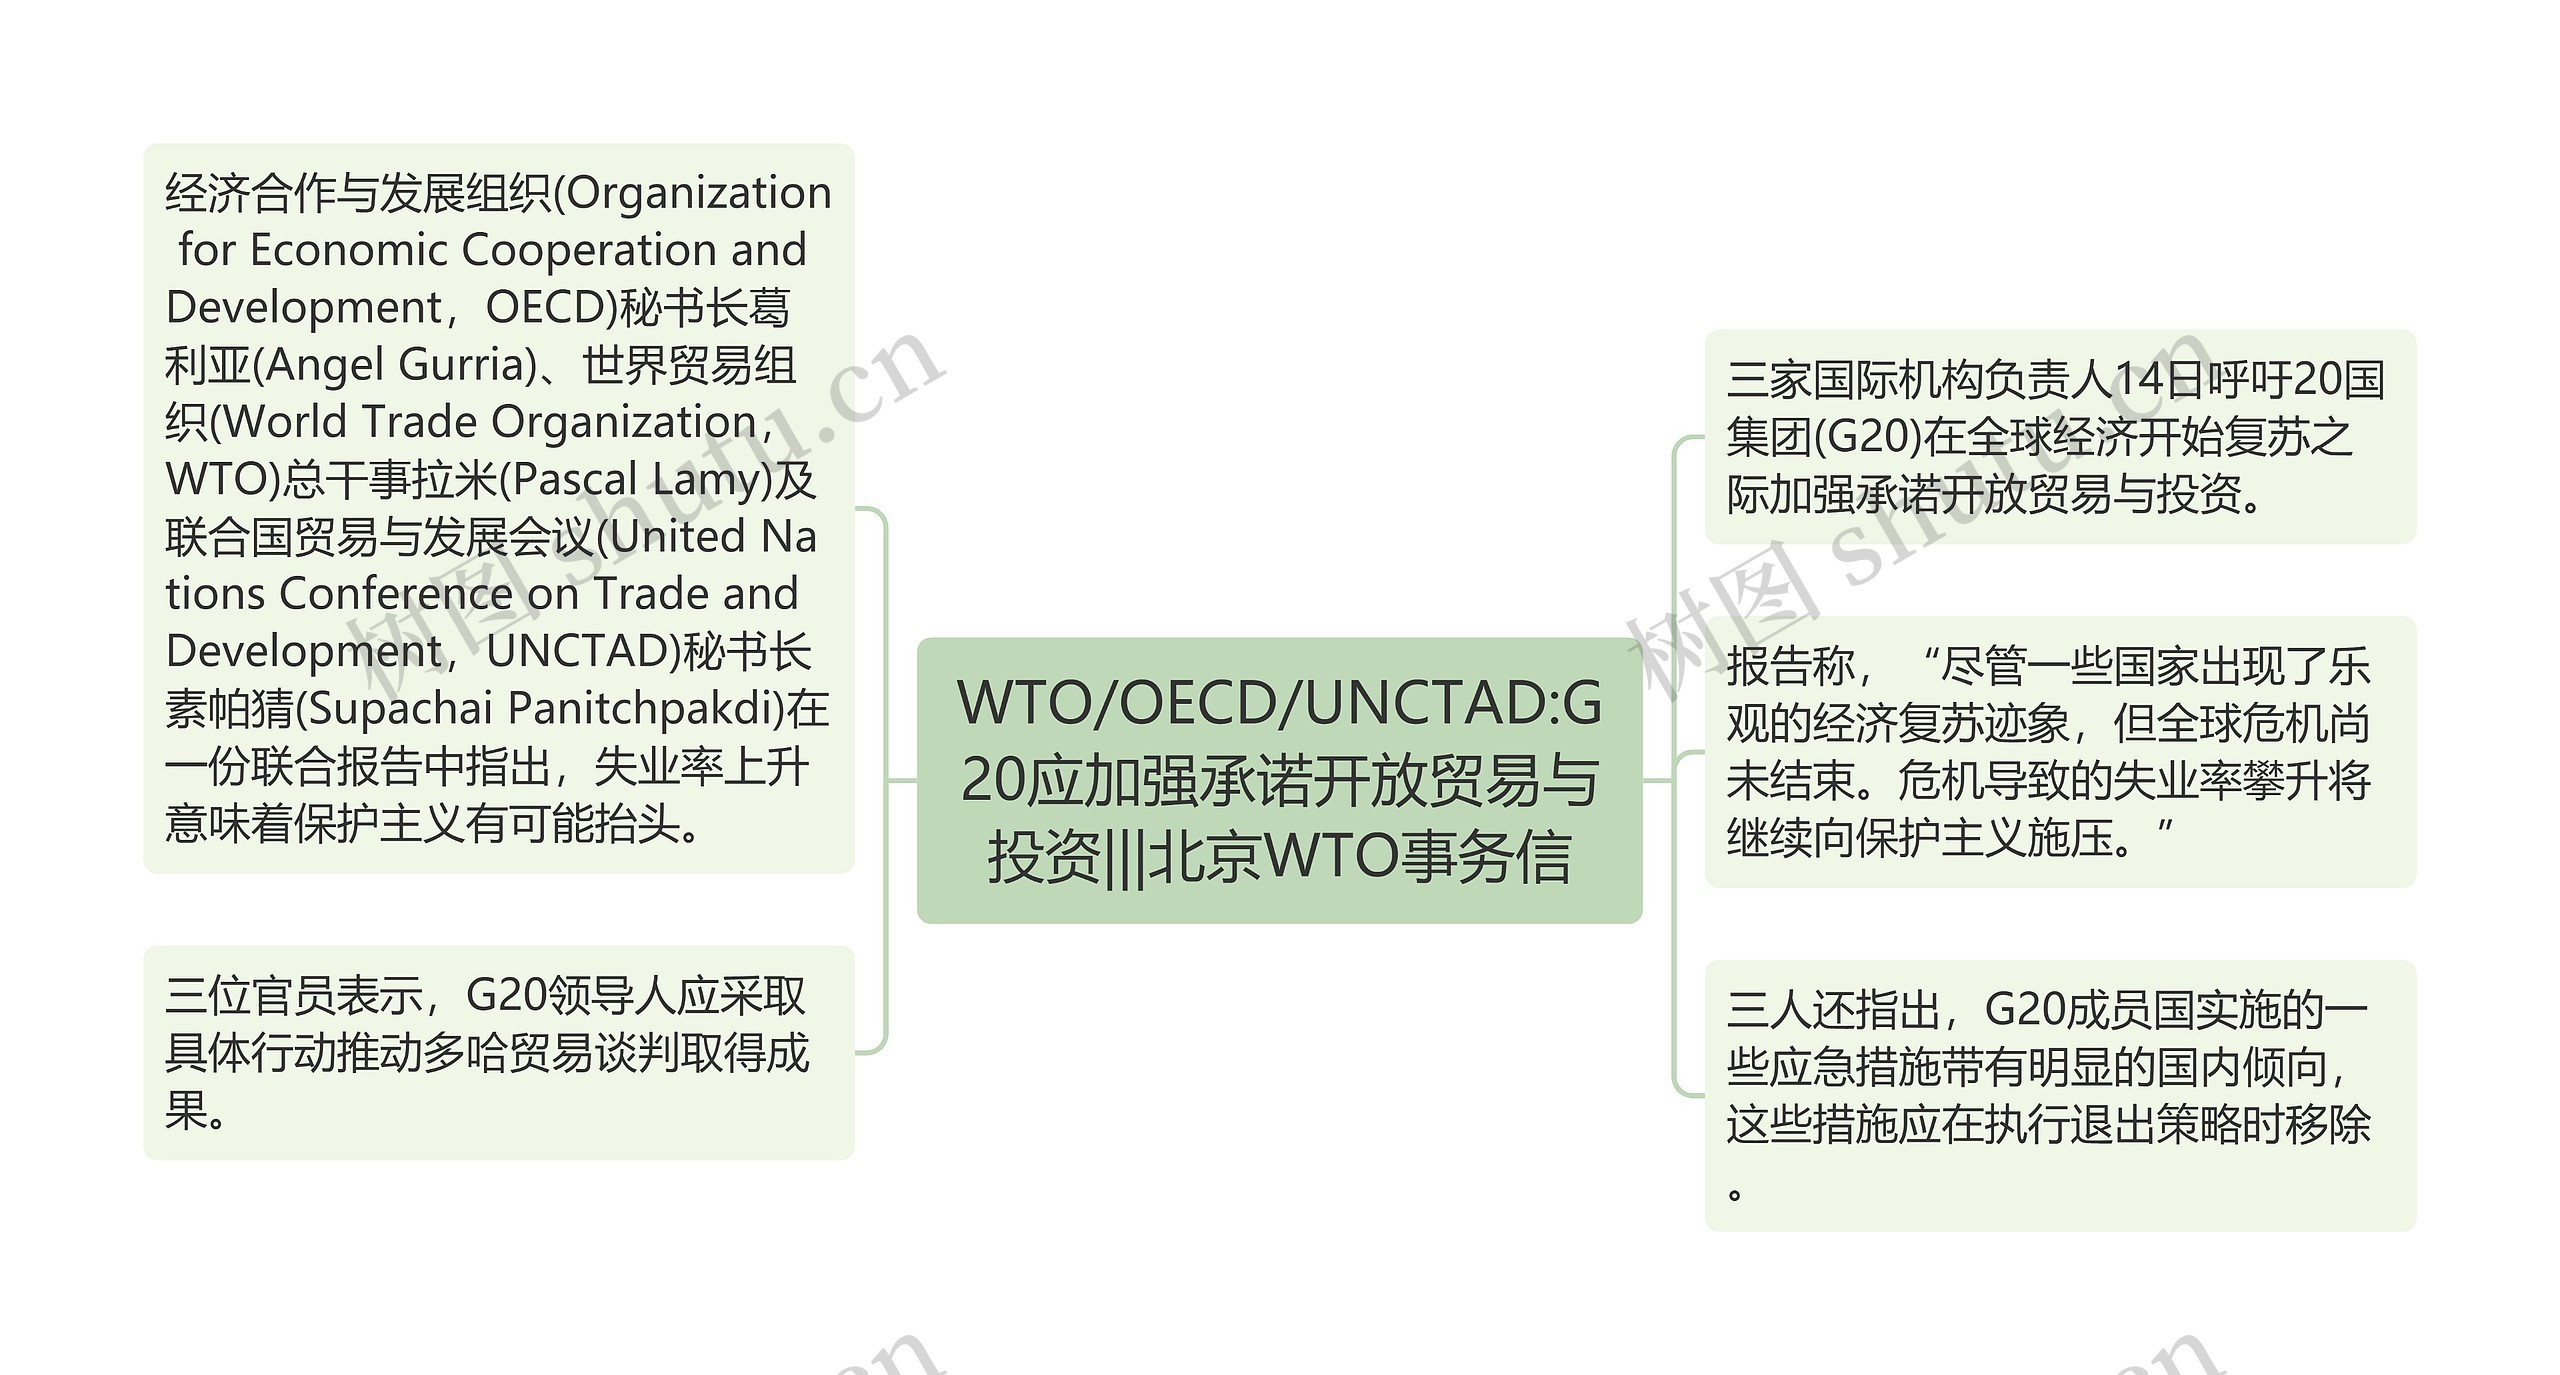 WTO/OECD/UNCTAD:G20应加强承诺开放贸易与投资|||北京WTO事务信思维导图